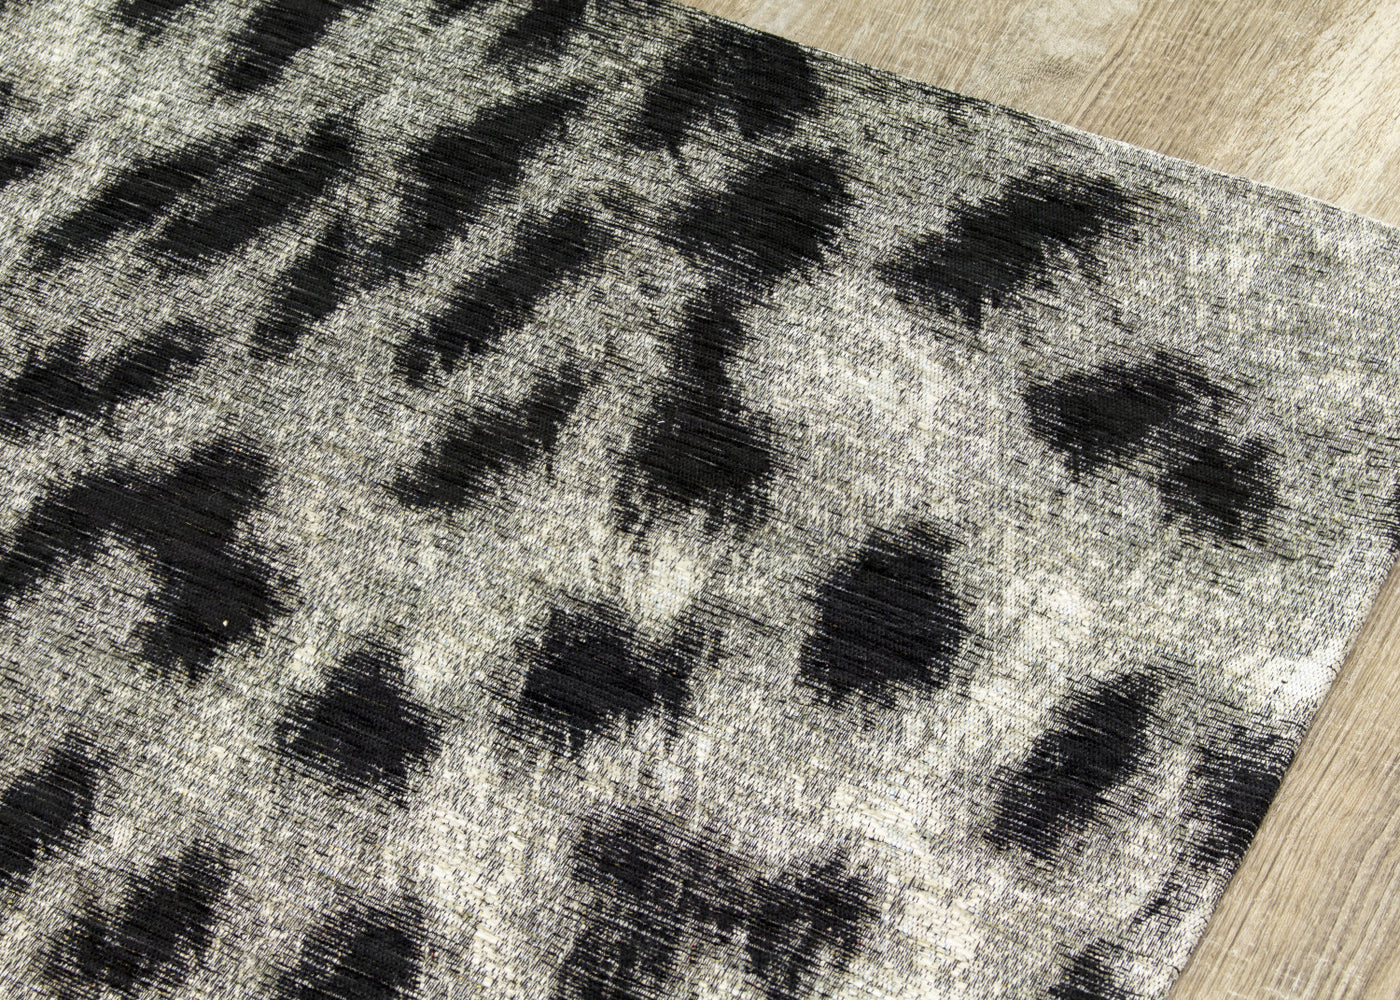 Kathy 5'1" X 7'7" Leopard Print Rug - Grey Black  Area Rug